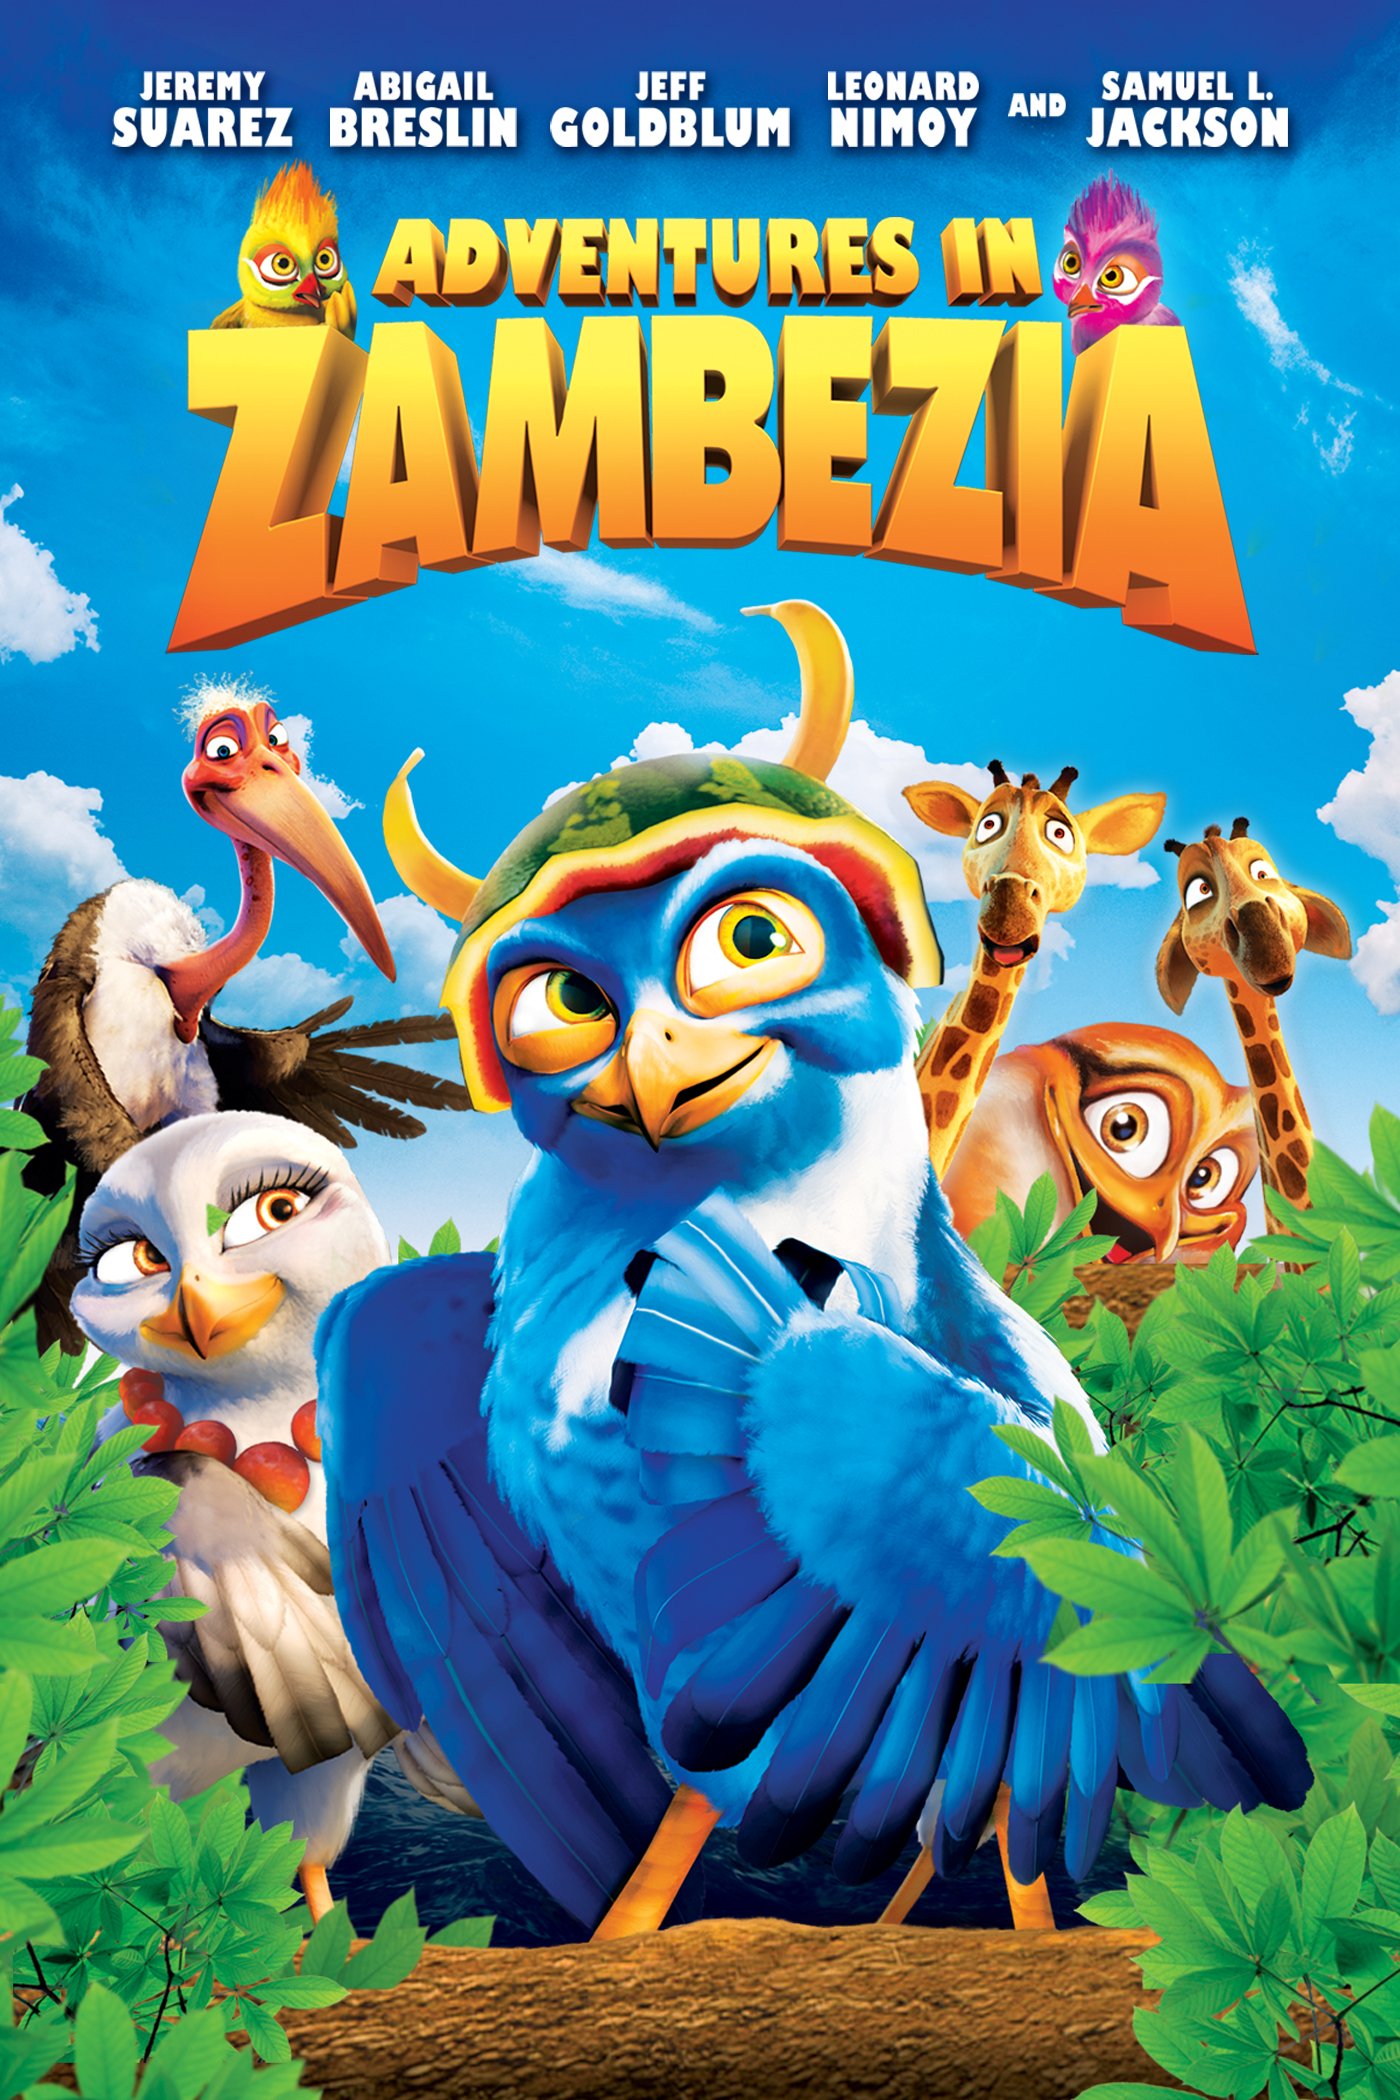 Zambezia DVD Release Date August 6, 2013